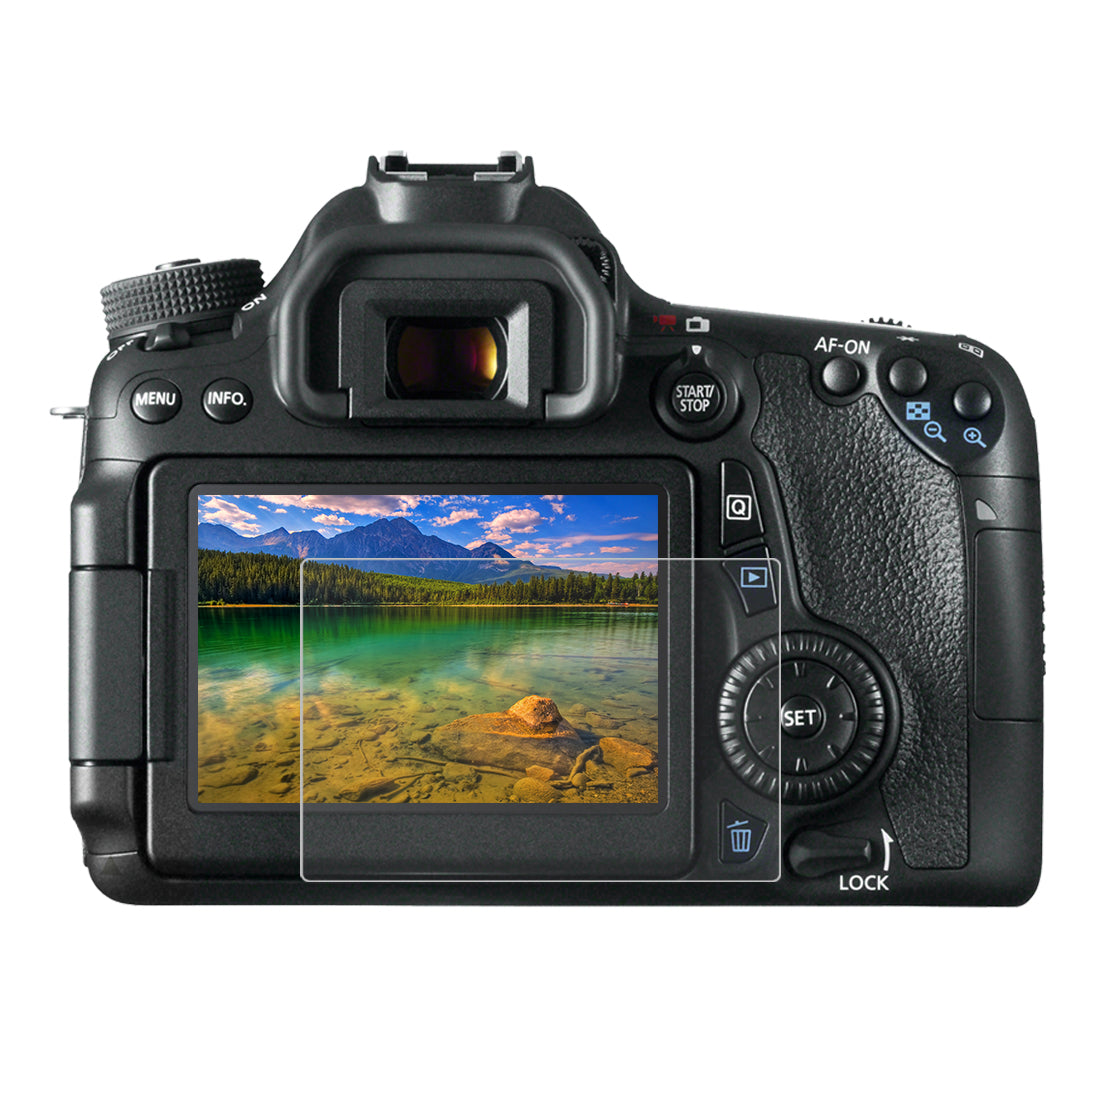 Puluz PU5503 SLR Camera Tempered Glass Screen Protector for Canon 650D/70D/700D/750D/760D/80D